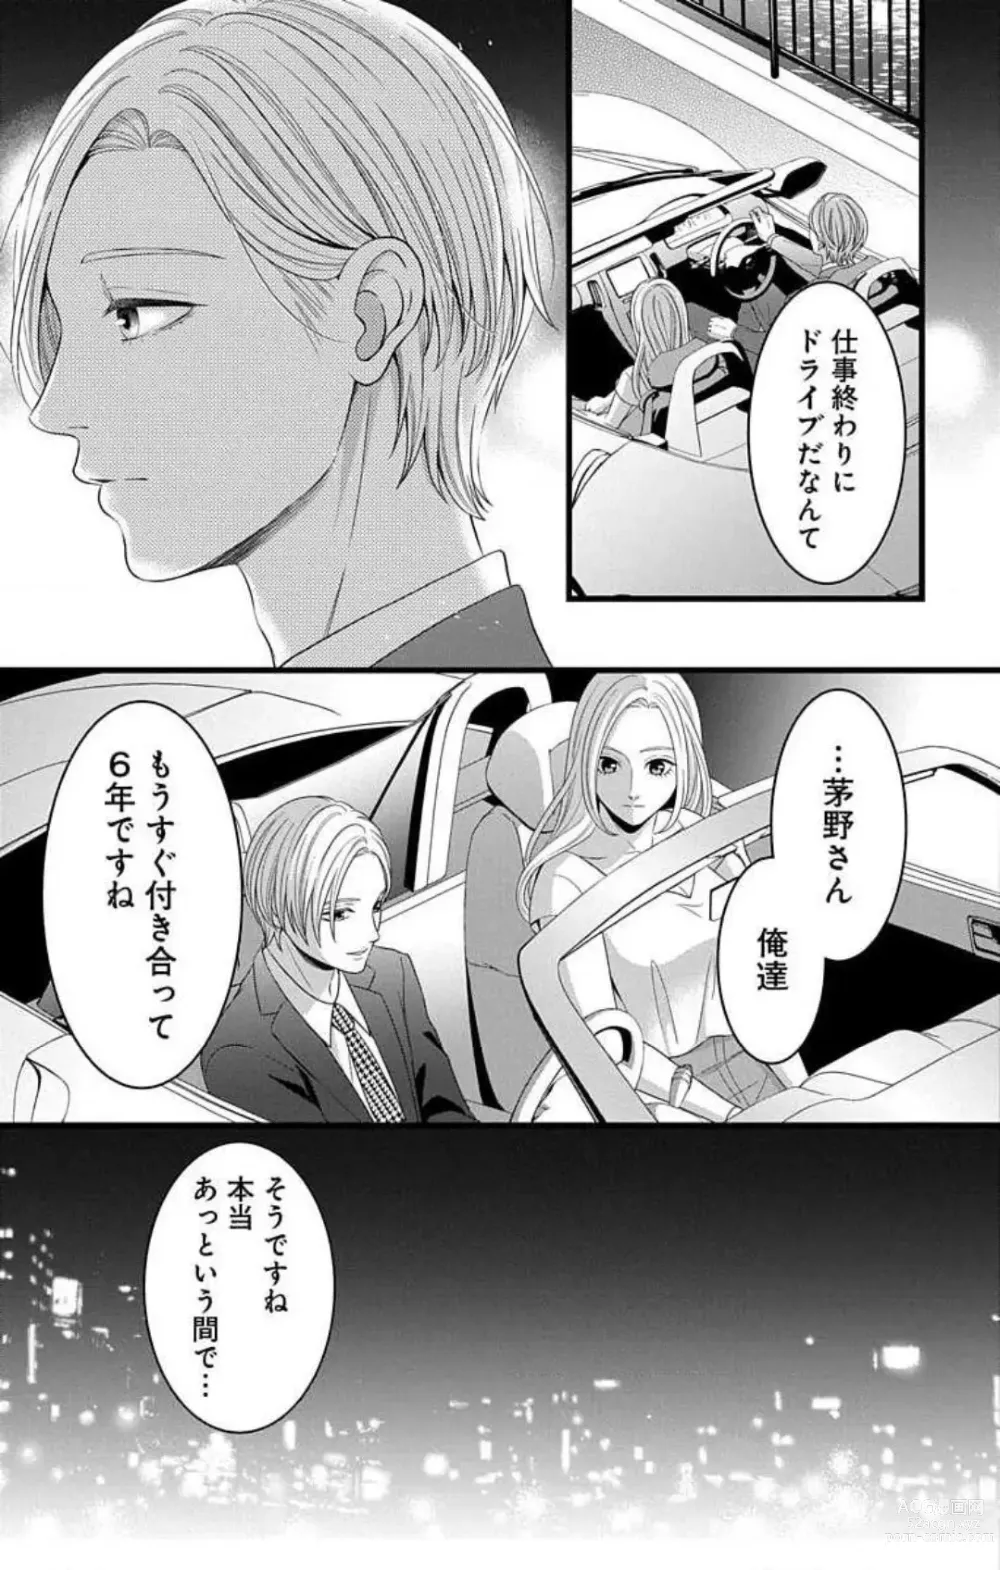 Page 258 of manga Mousou Shoujo 21-27